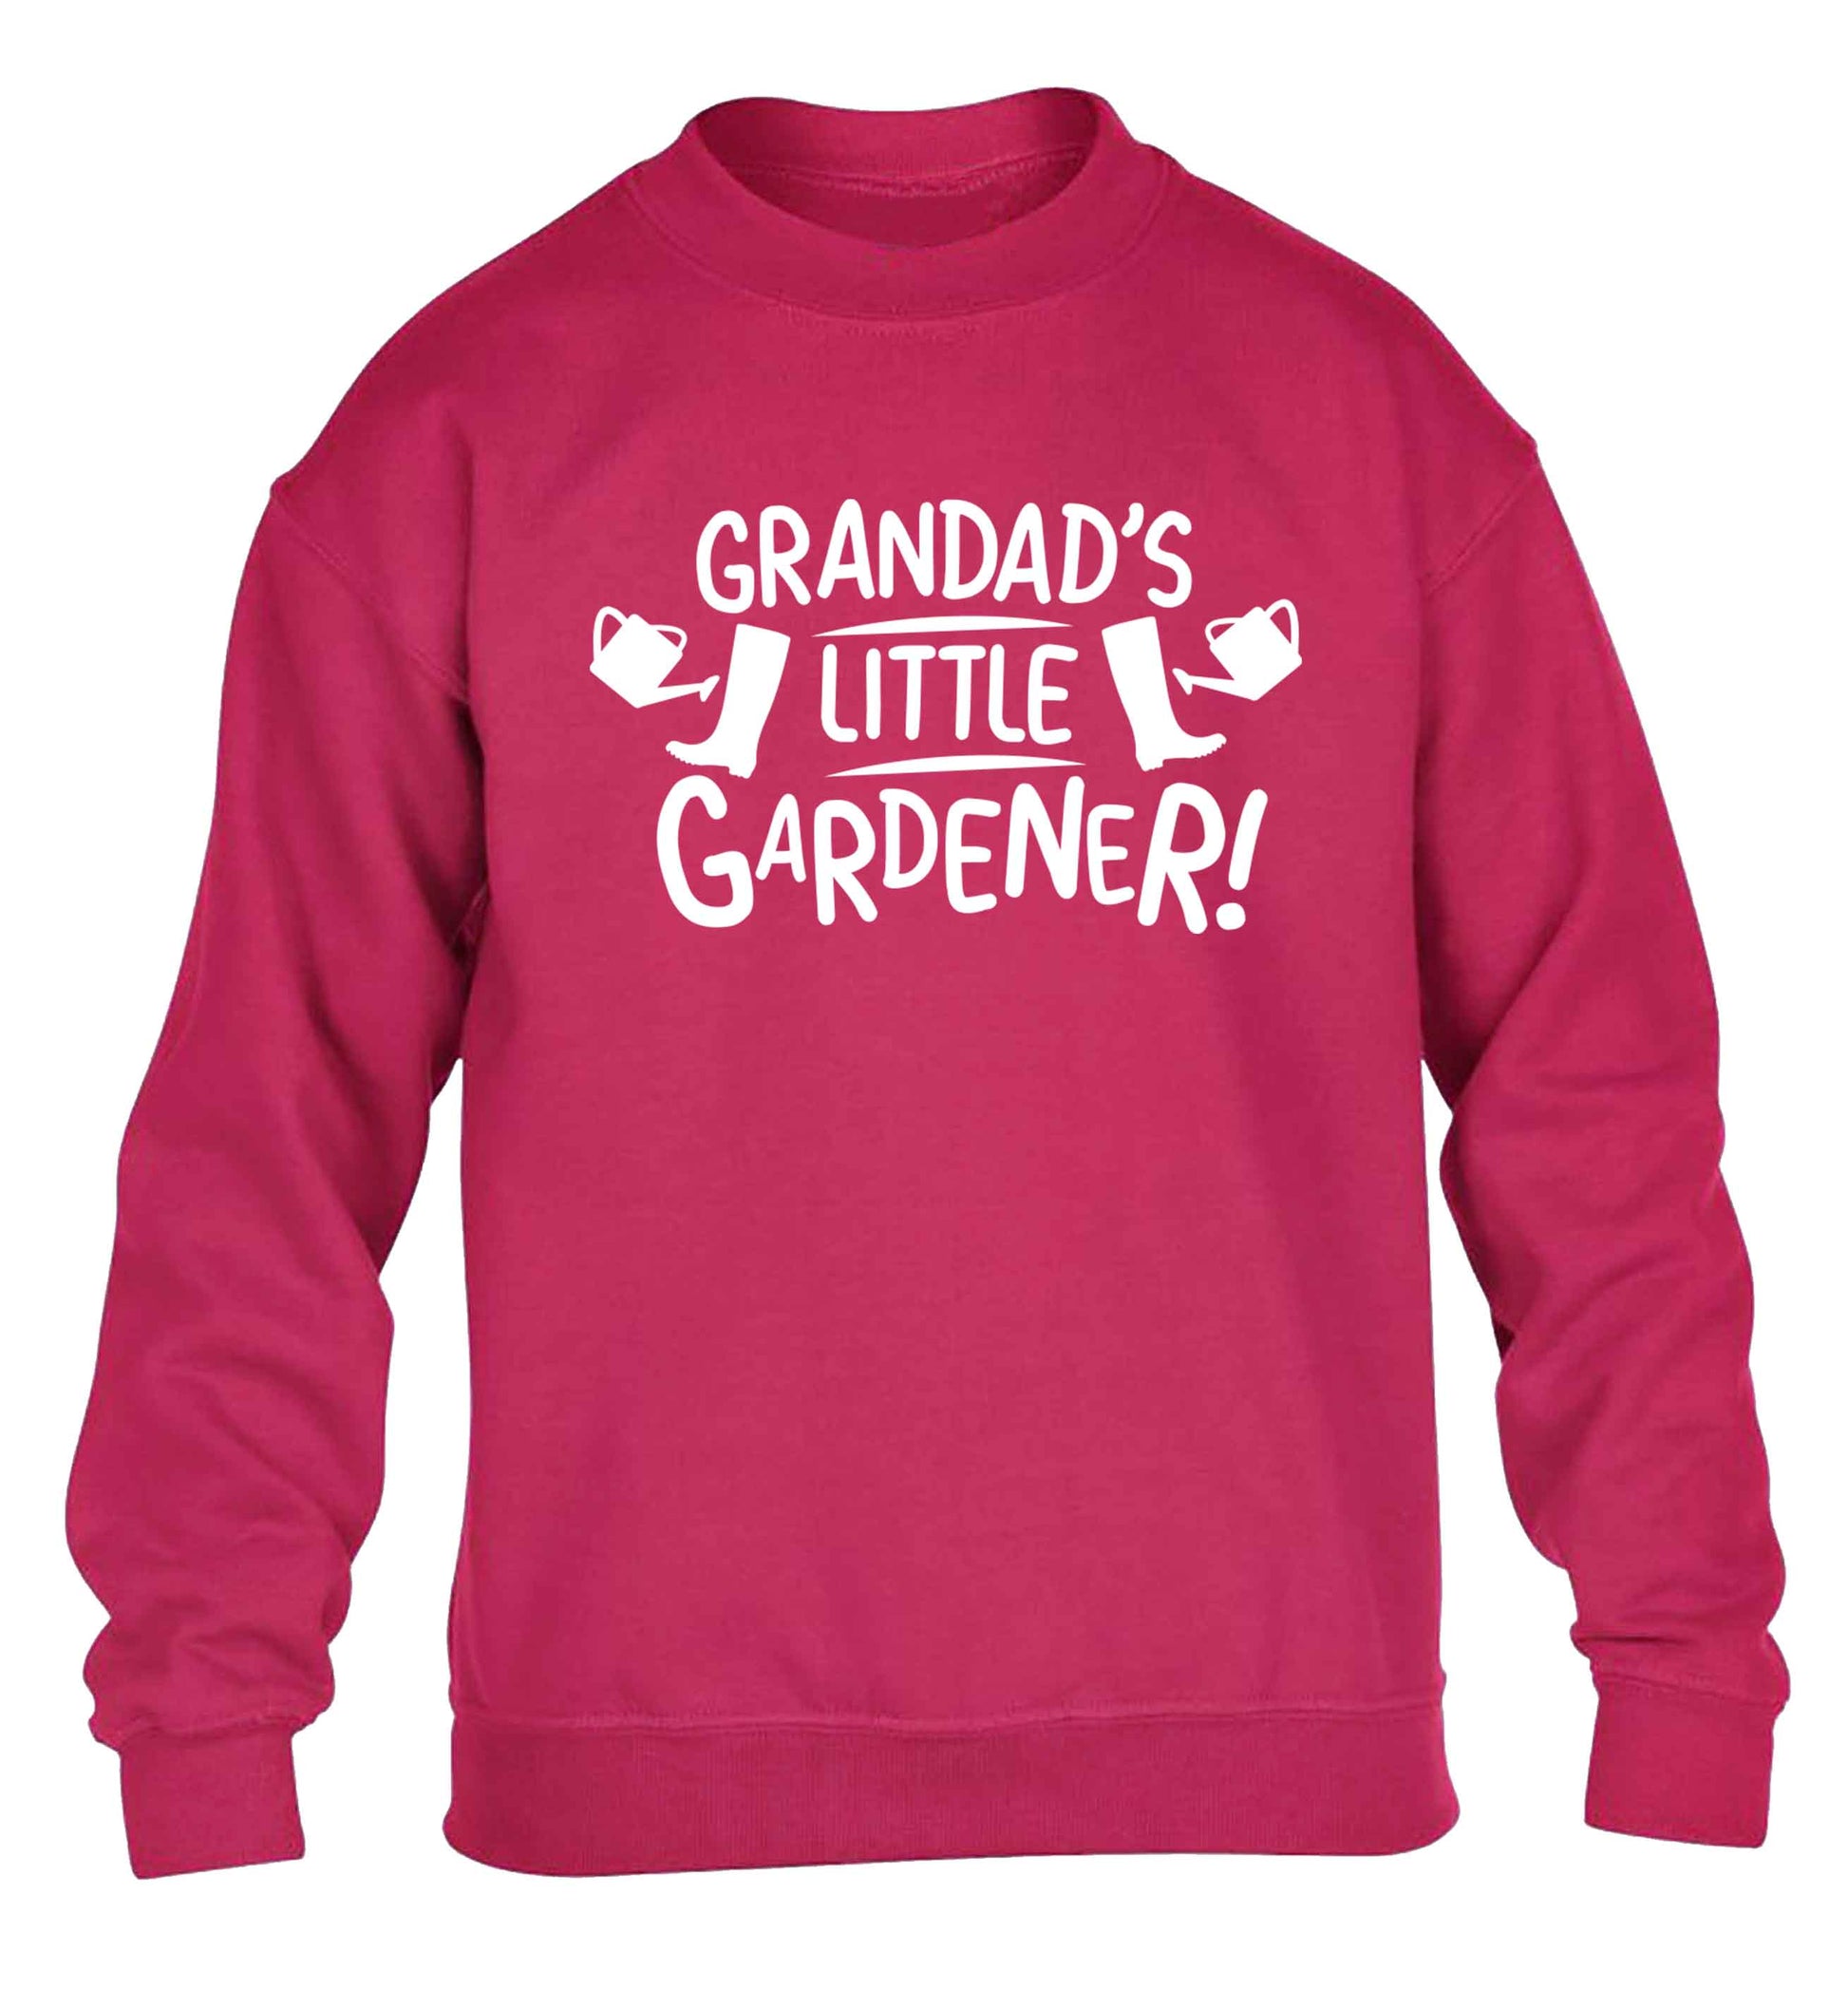 Grandad's little gardener children's pink sweater 12-13 Years